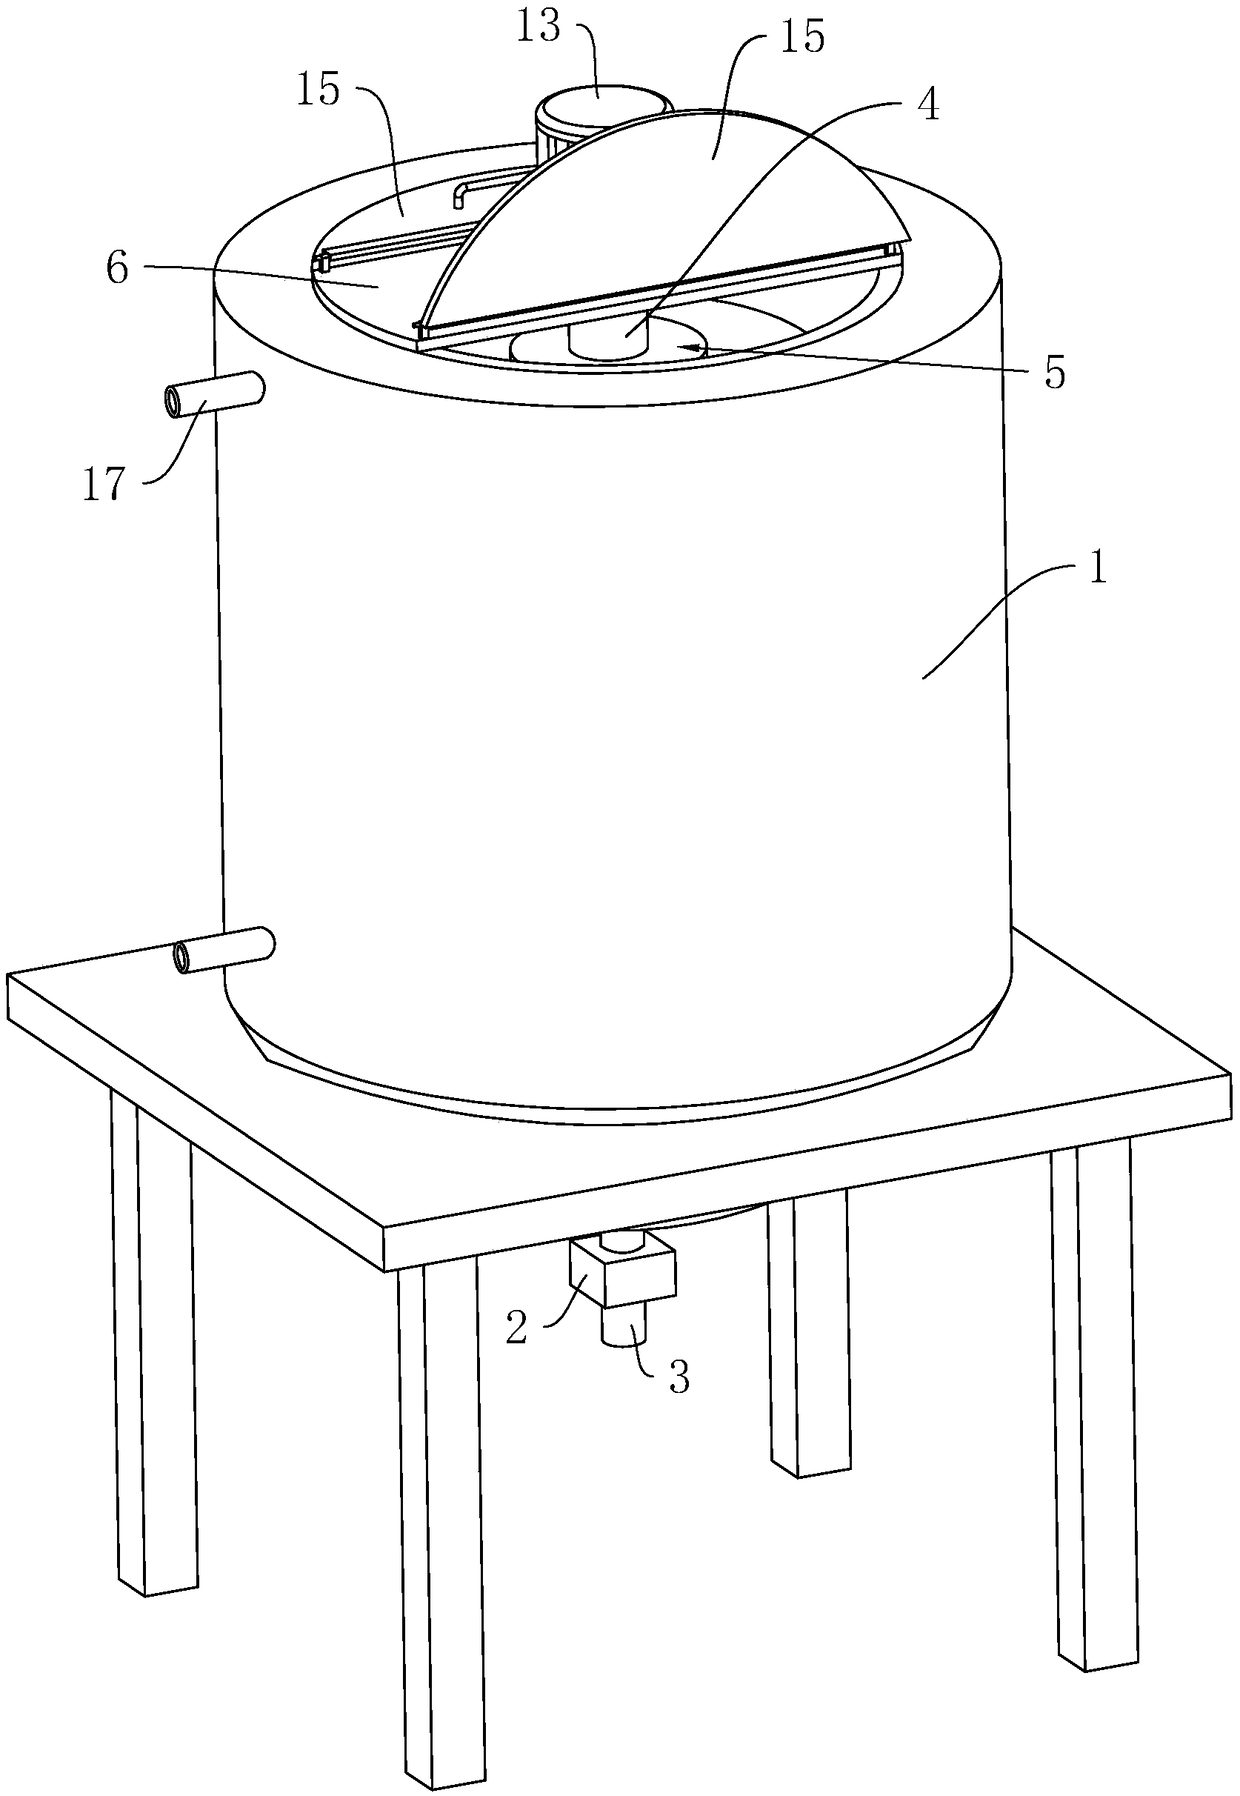 Stirring barrel and method for preparing environmentally-friendly cutting oil by using stirring barrel